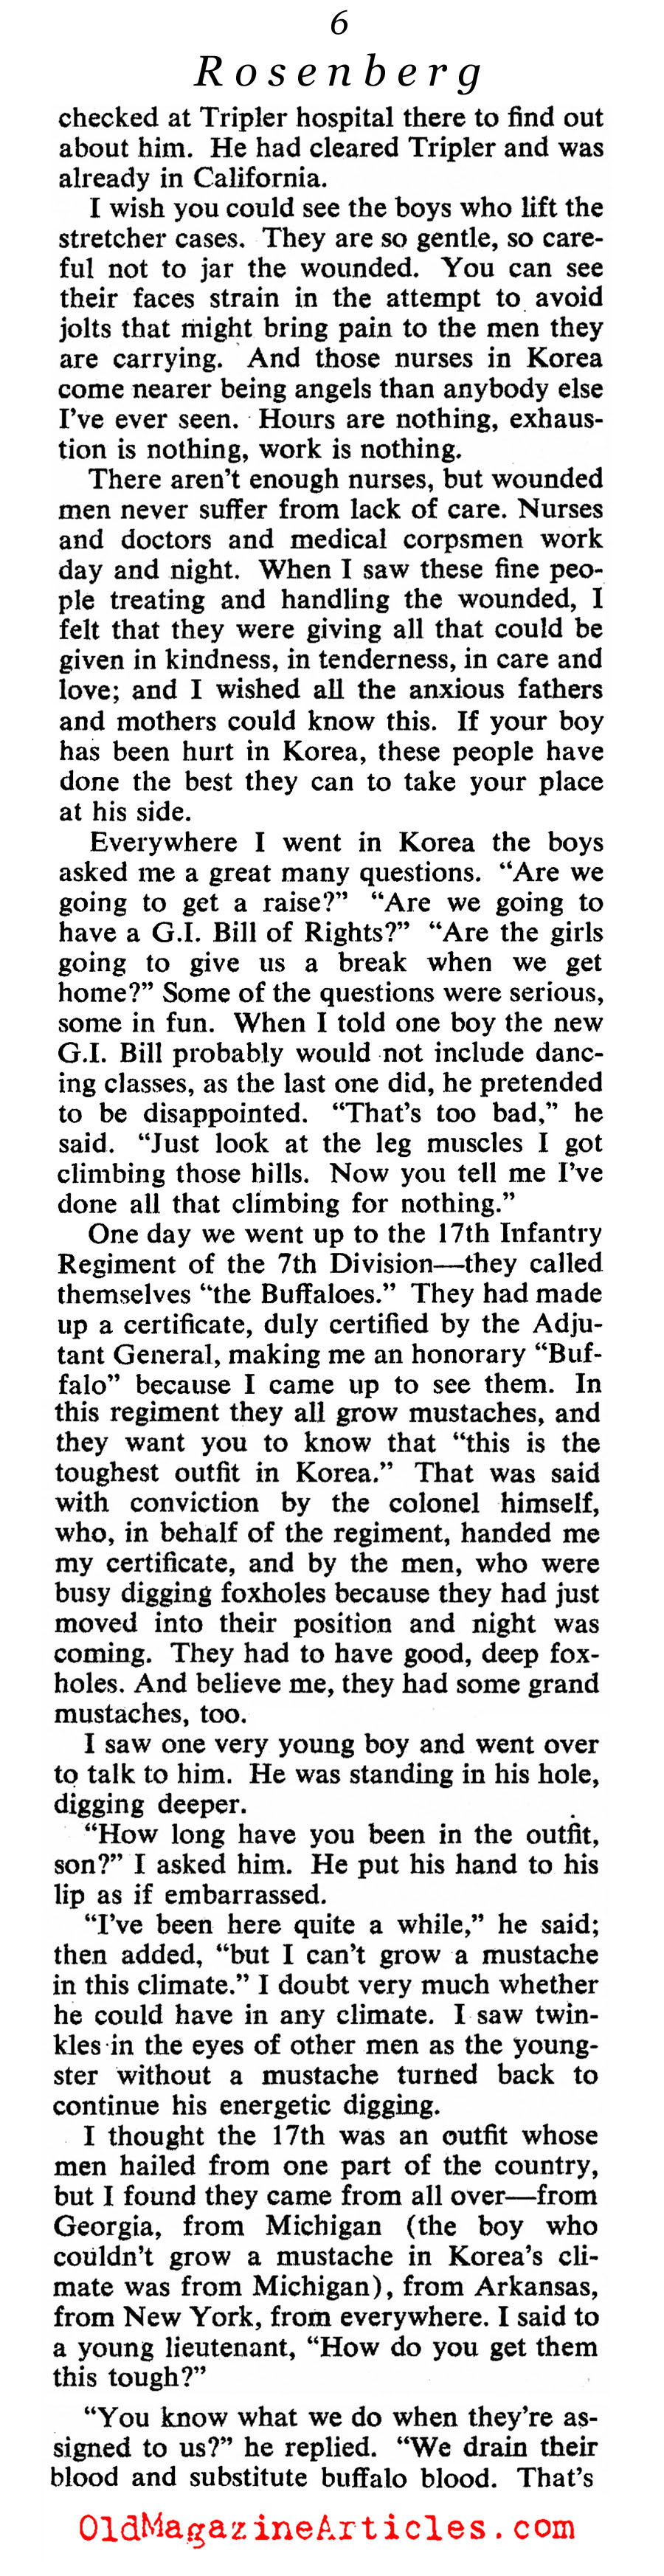 ''This I Saw In Korea'' (Collier's Magazine, 1952)